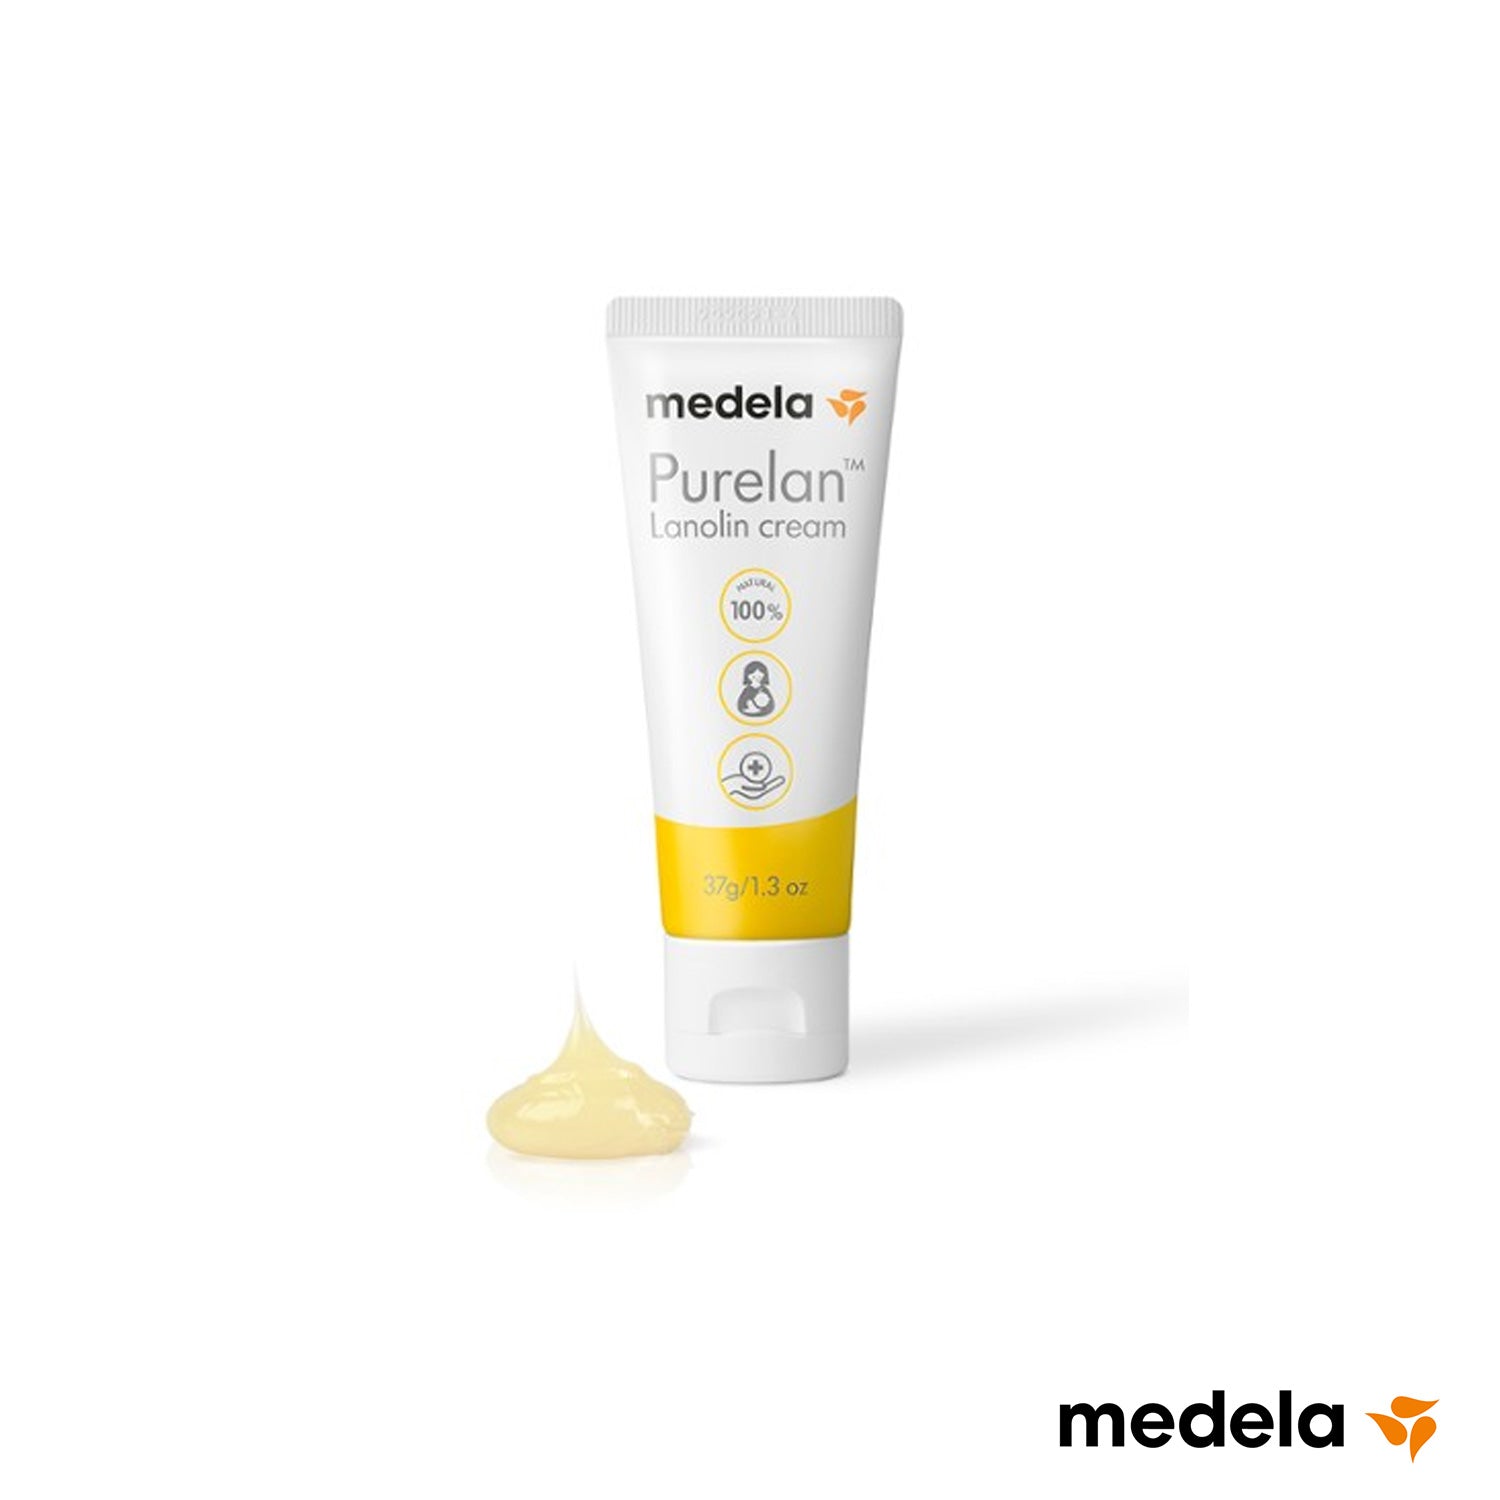 Medela - Purelan Lanolin Cream 37grams – Iperbimbo